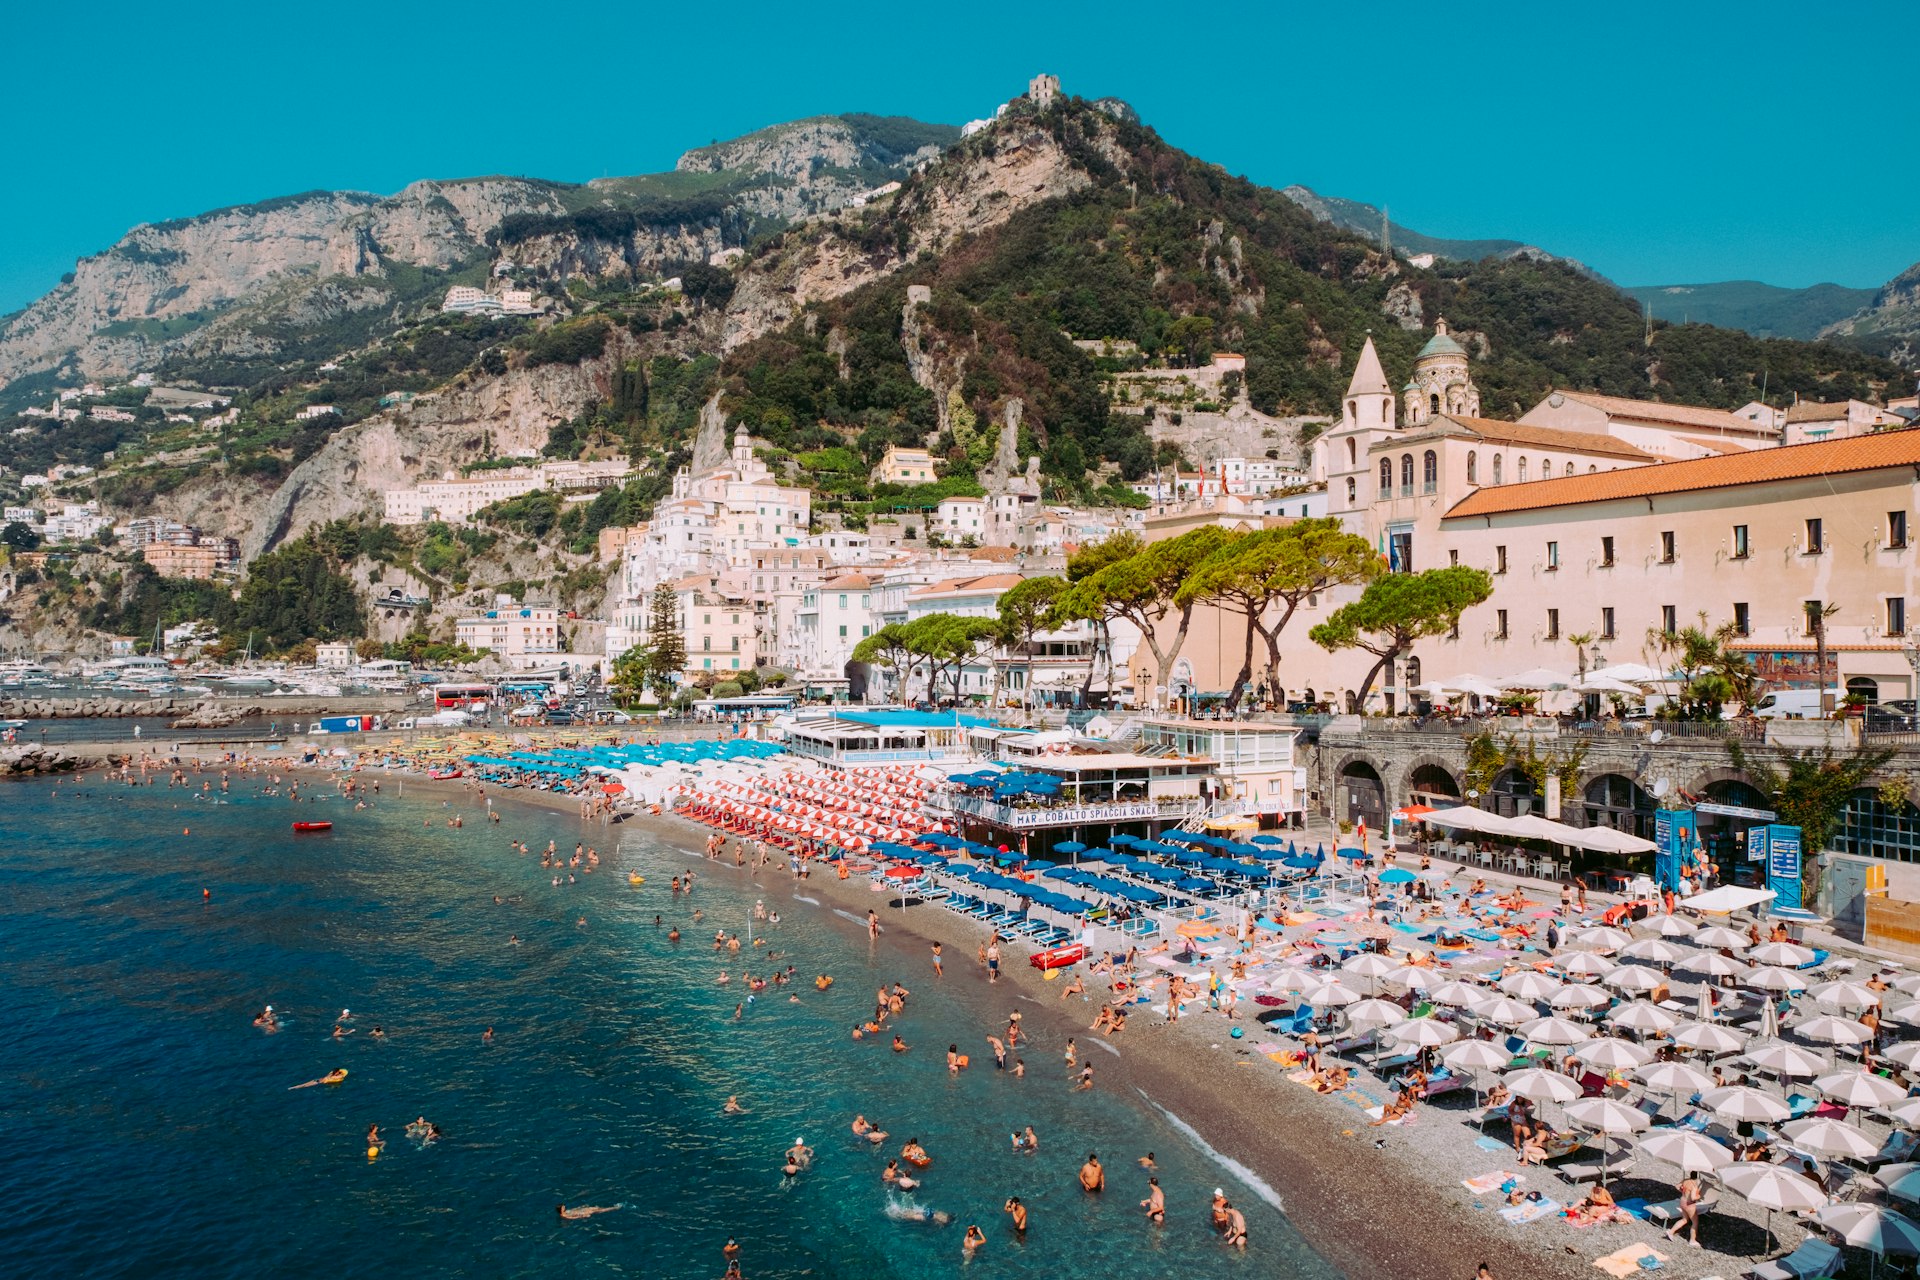 The beach filled with umbrellas, Amalfi, Campania, Italy